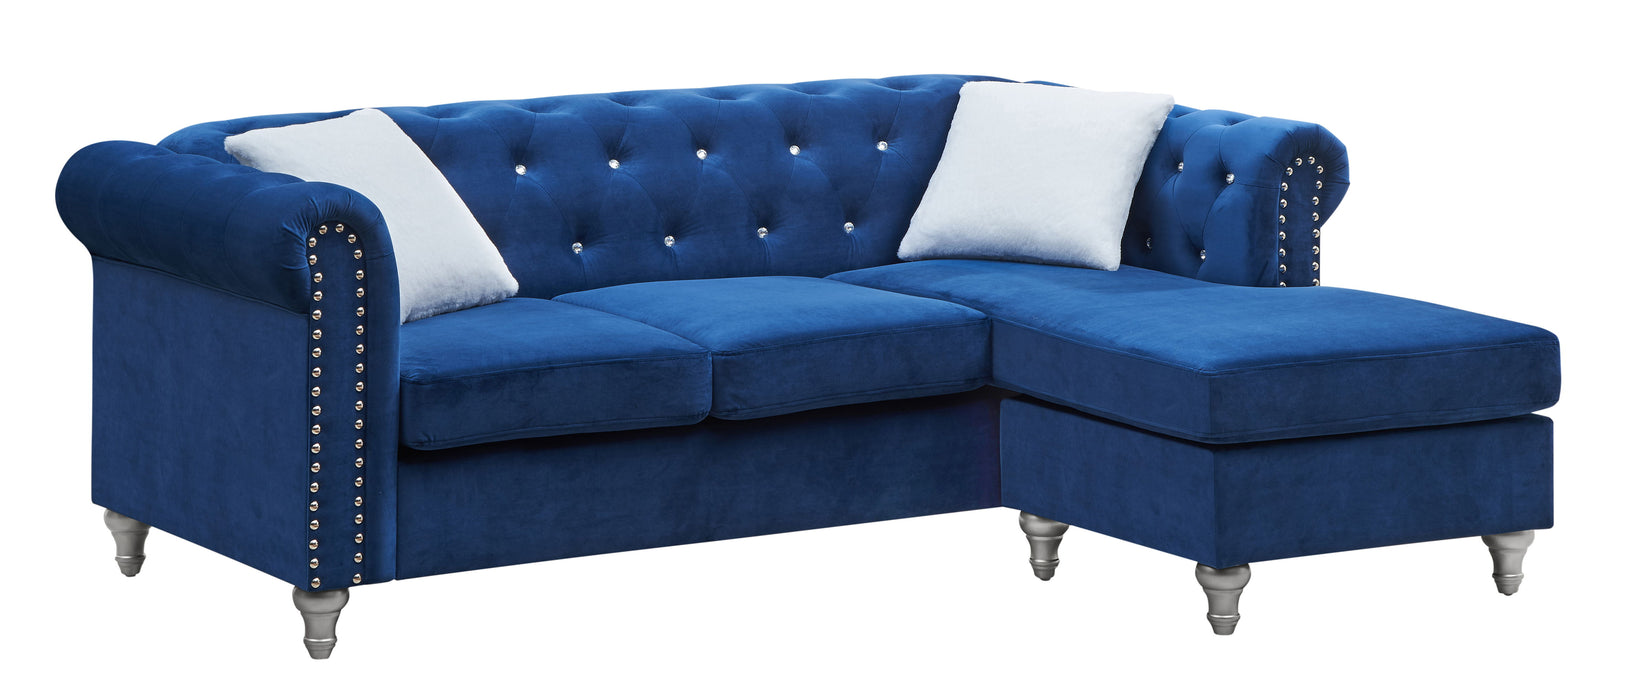 Glory Furniture Raisa Sofa Chaise, Burgandy - Navy Blue